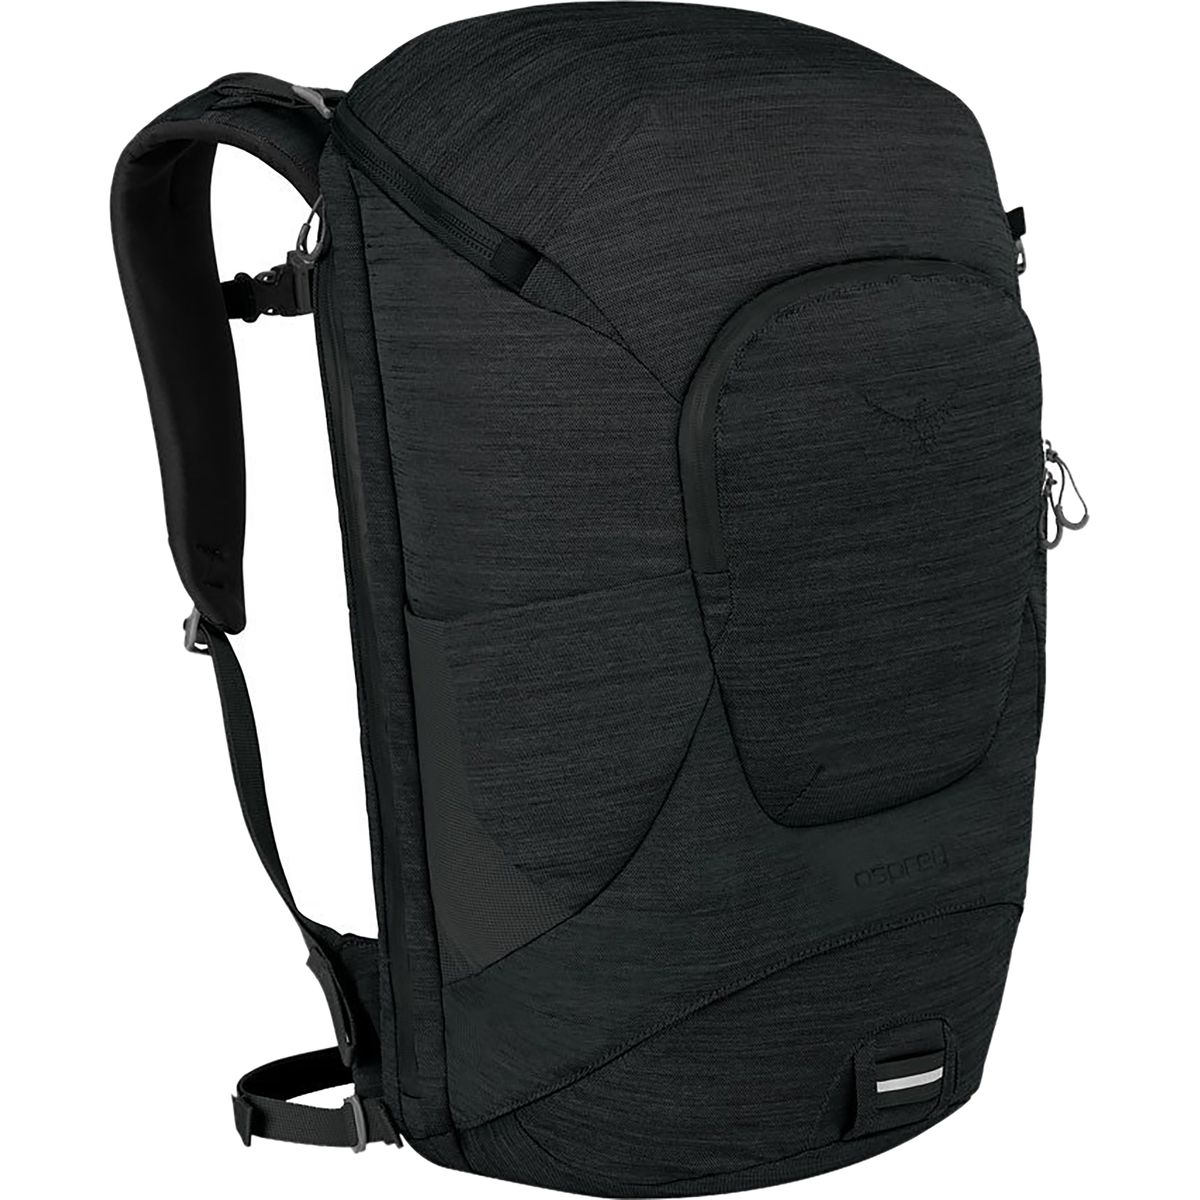 Osprey Packs Bitstream Backpack - 1831cu in Black, One Size